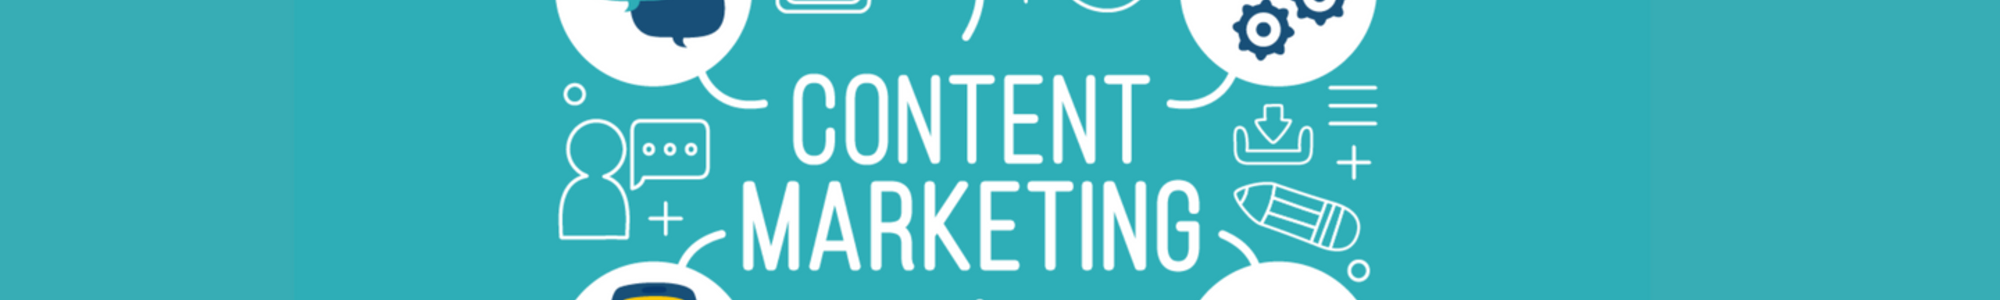 Content Marketing Statistics Featured